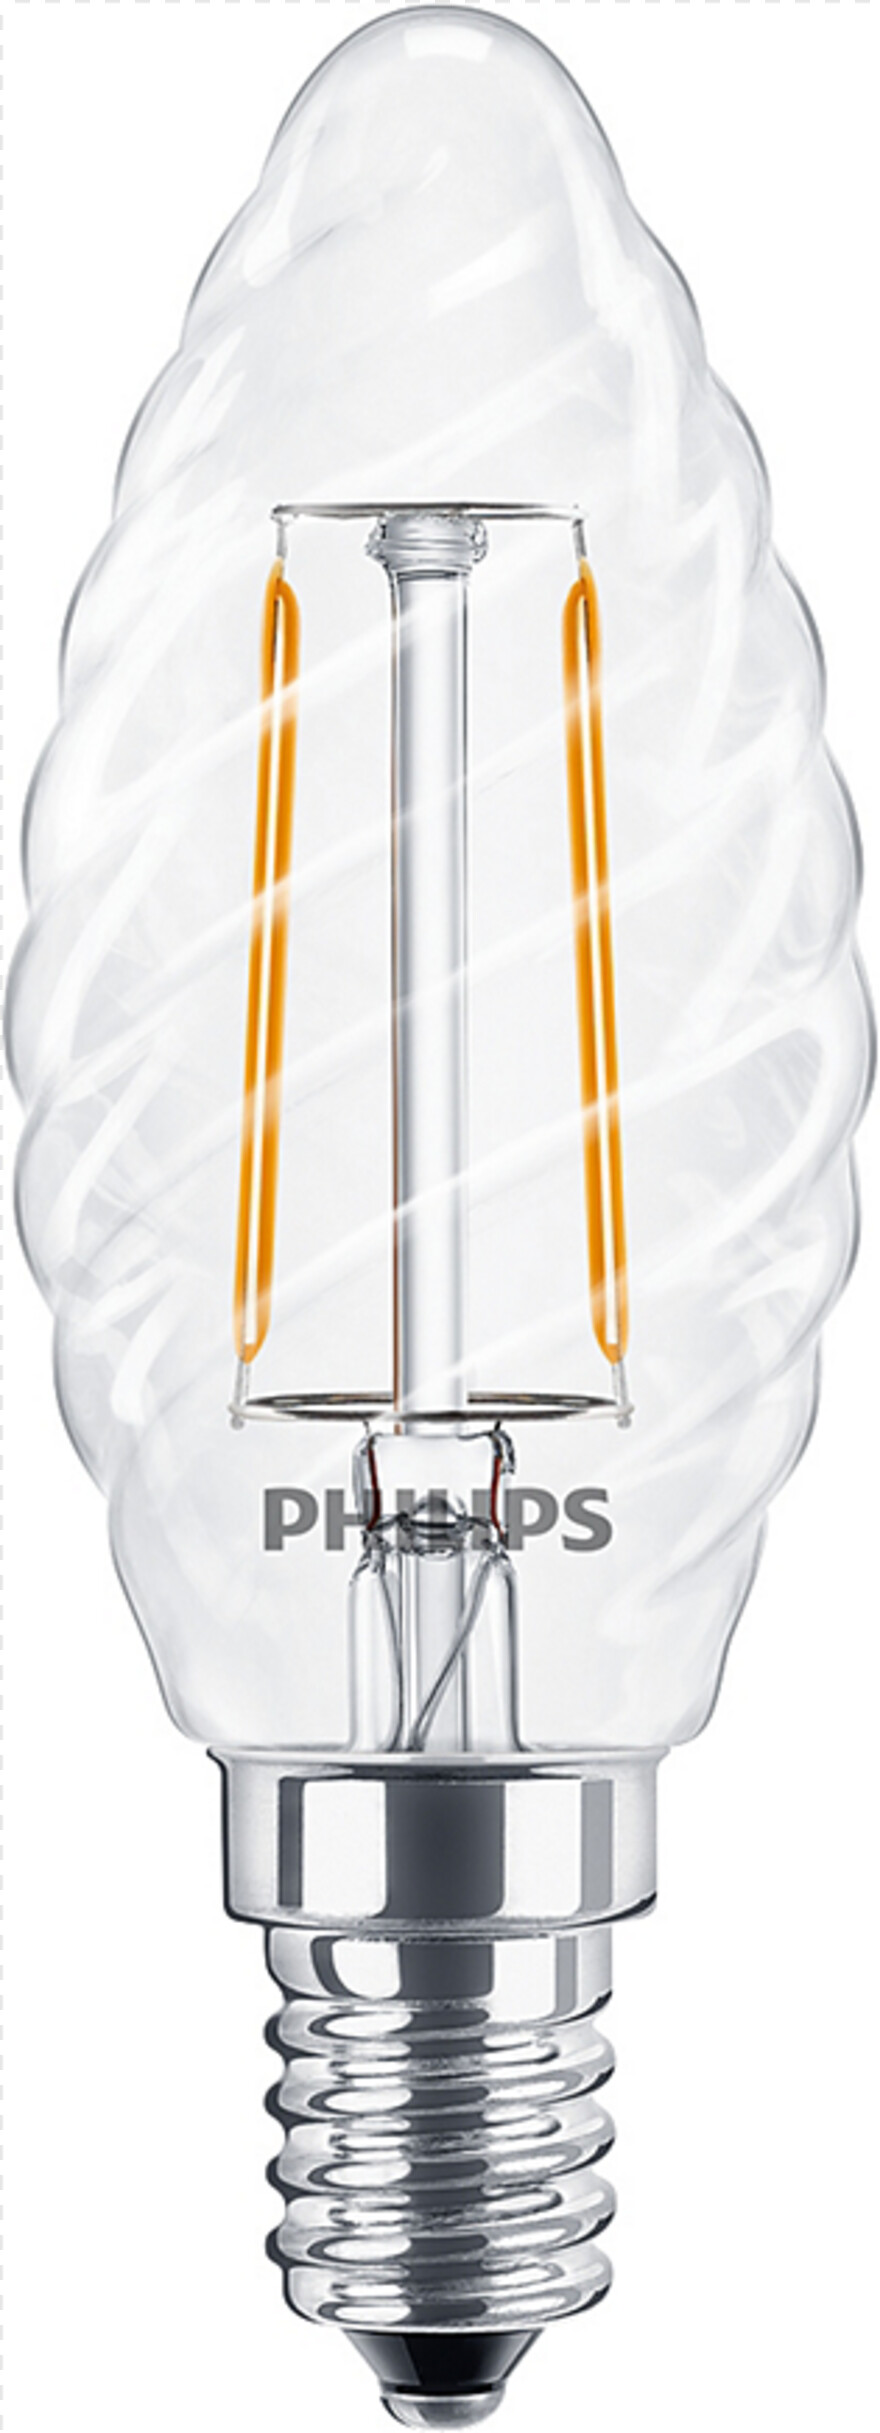 philips-logo # 597230